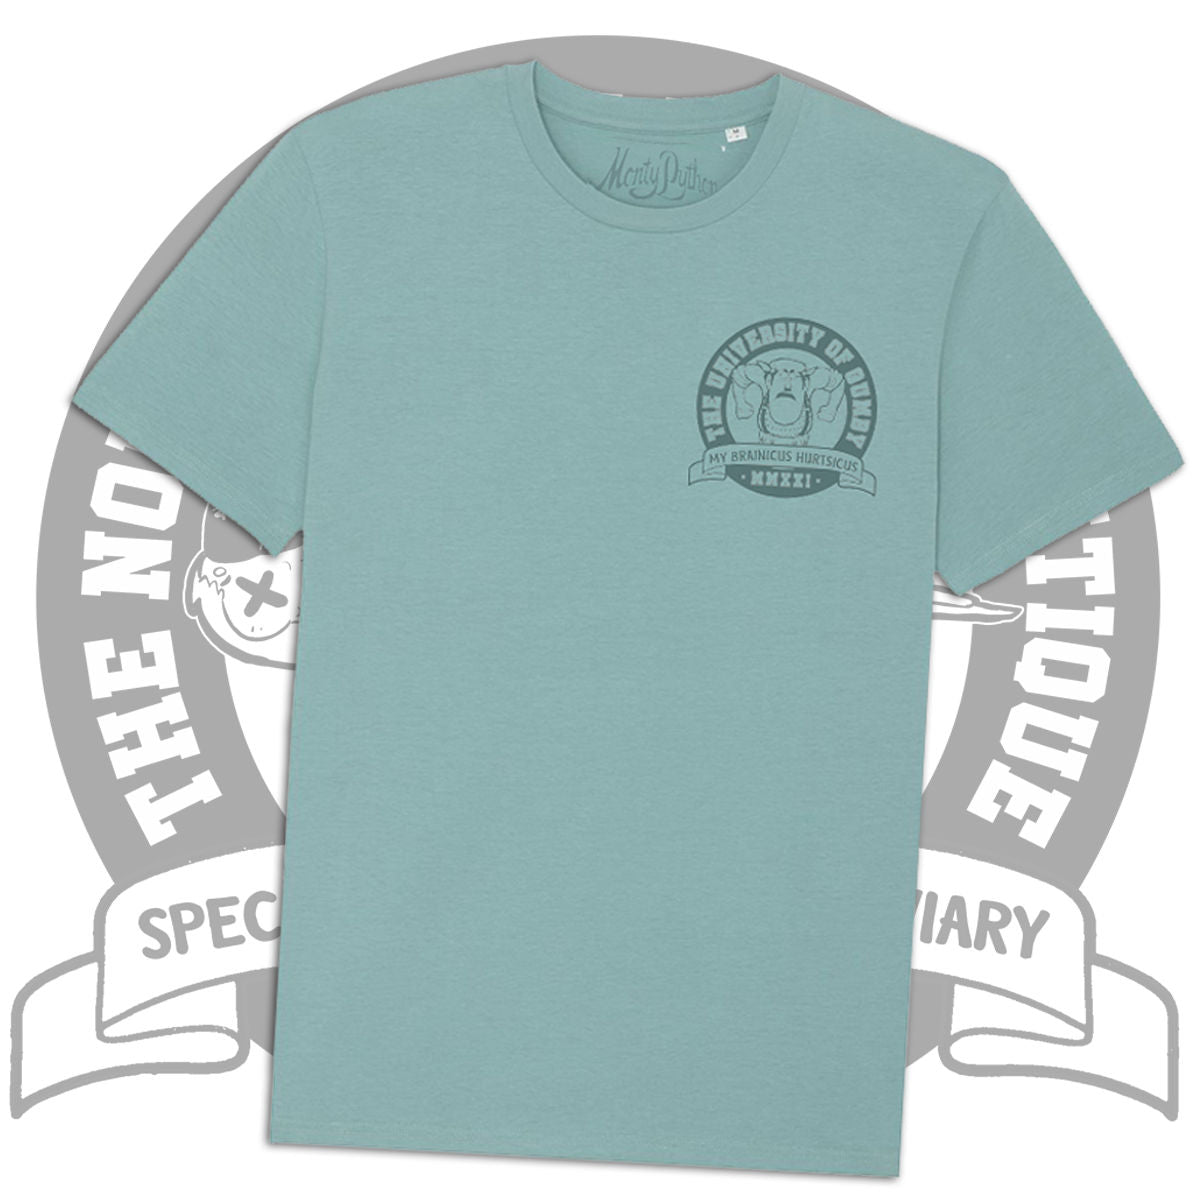 Monty Python - Gumby University T-Shirt